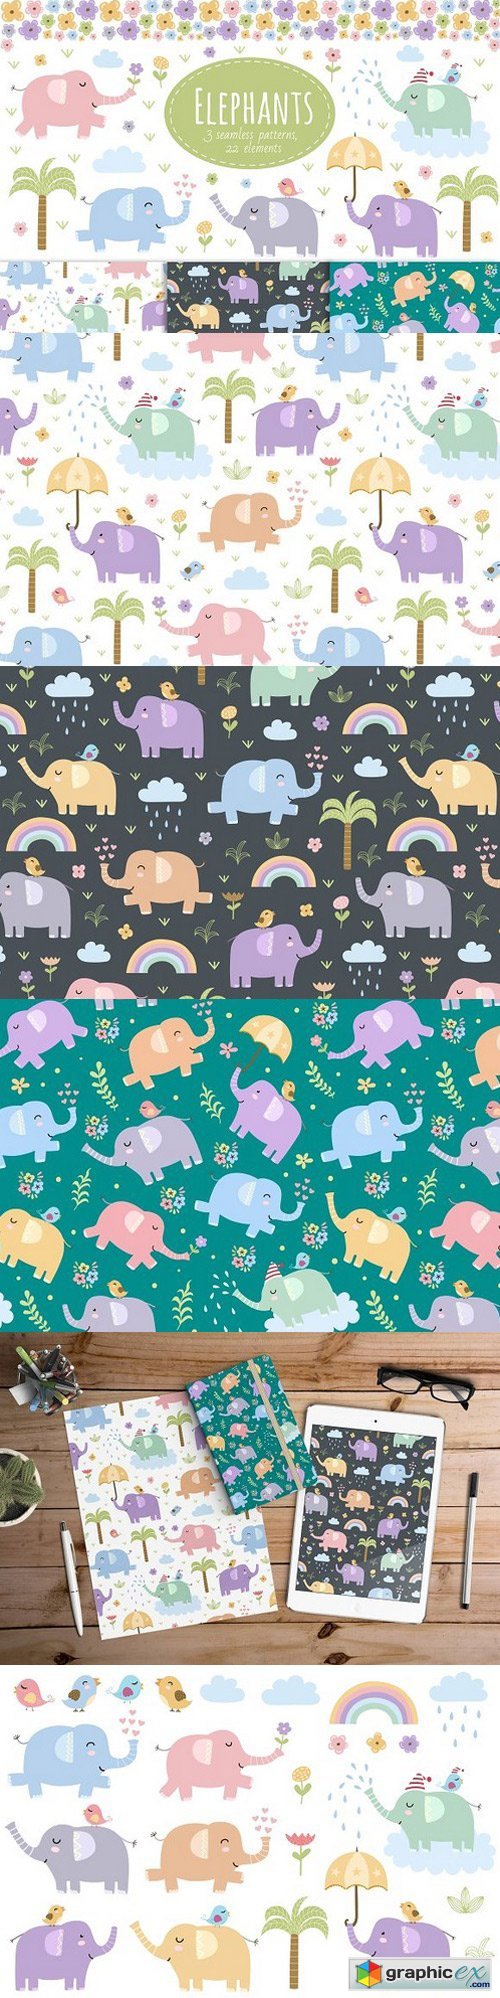 Elephants: seamless patterns&clipart